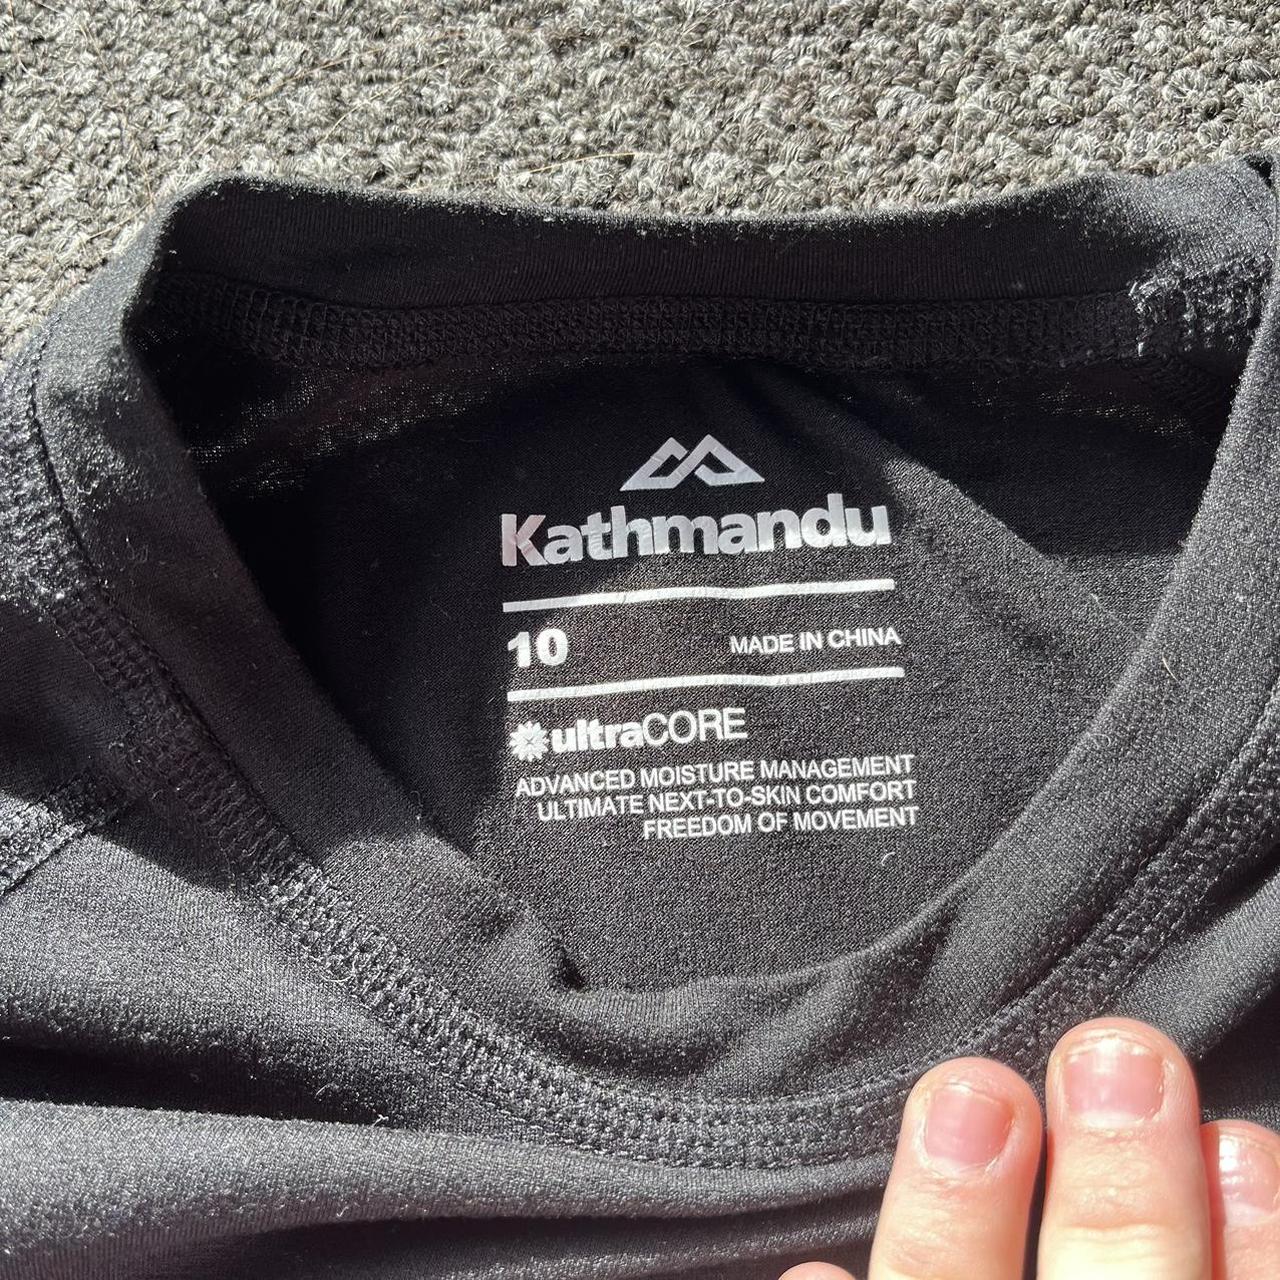 Kathmandu ultra-core long sleeved top, tight